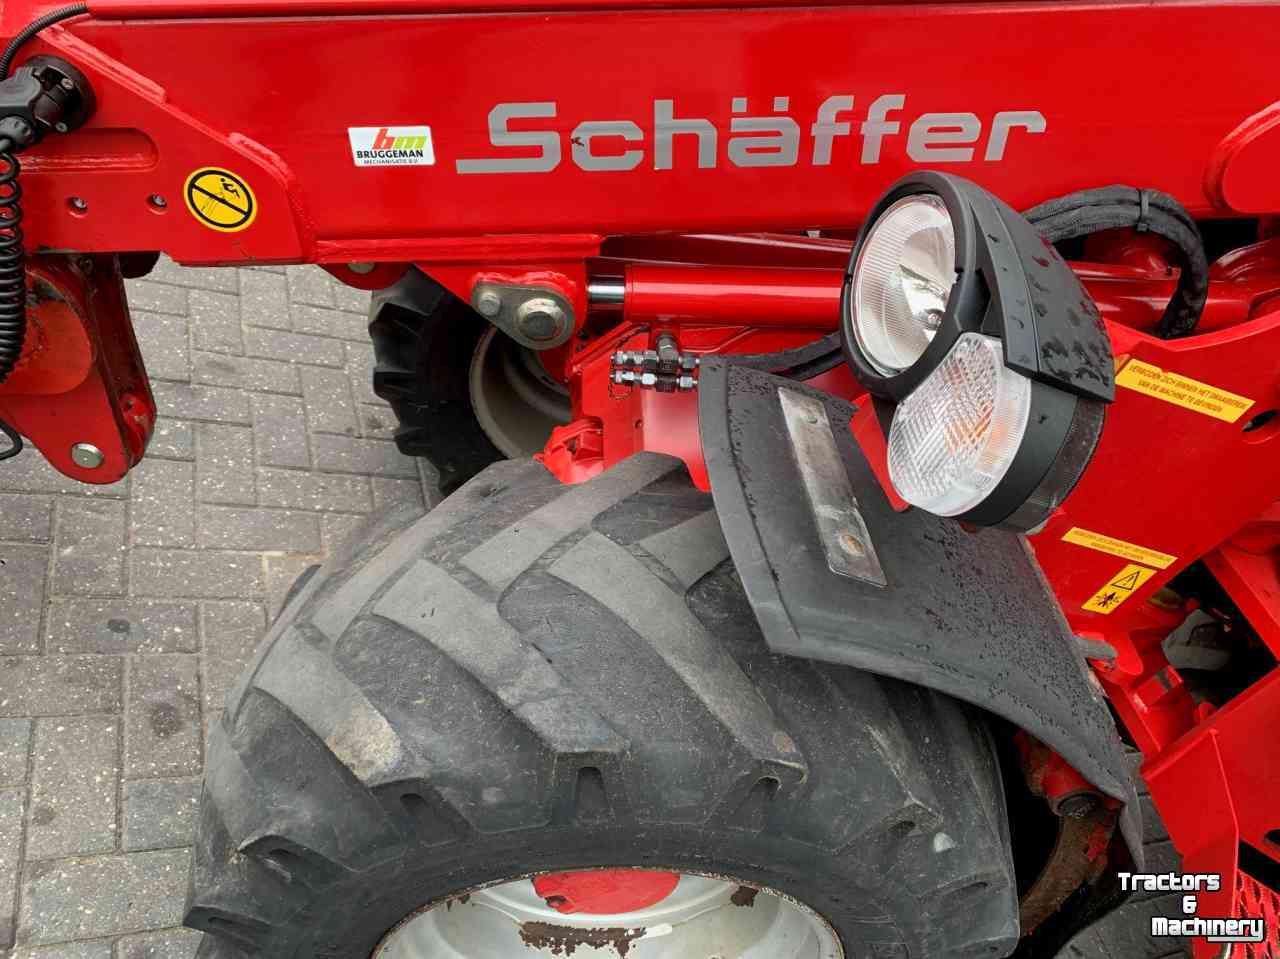 Chargeuse sur pneus Schäffer 460 T